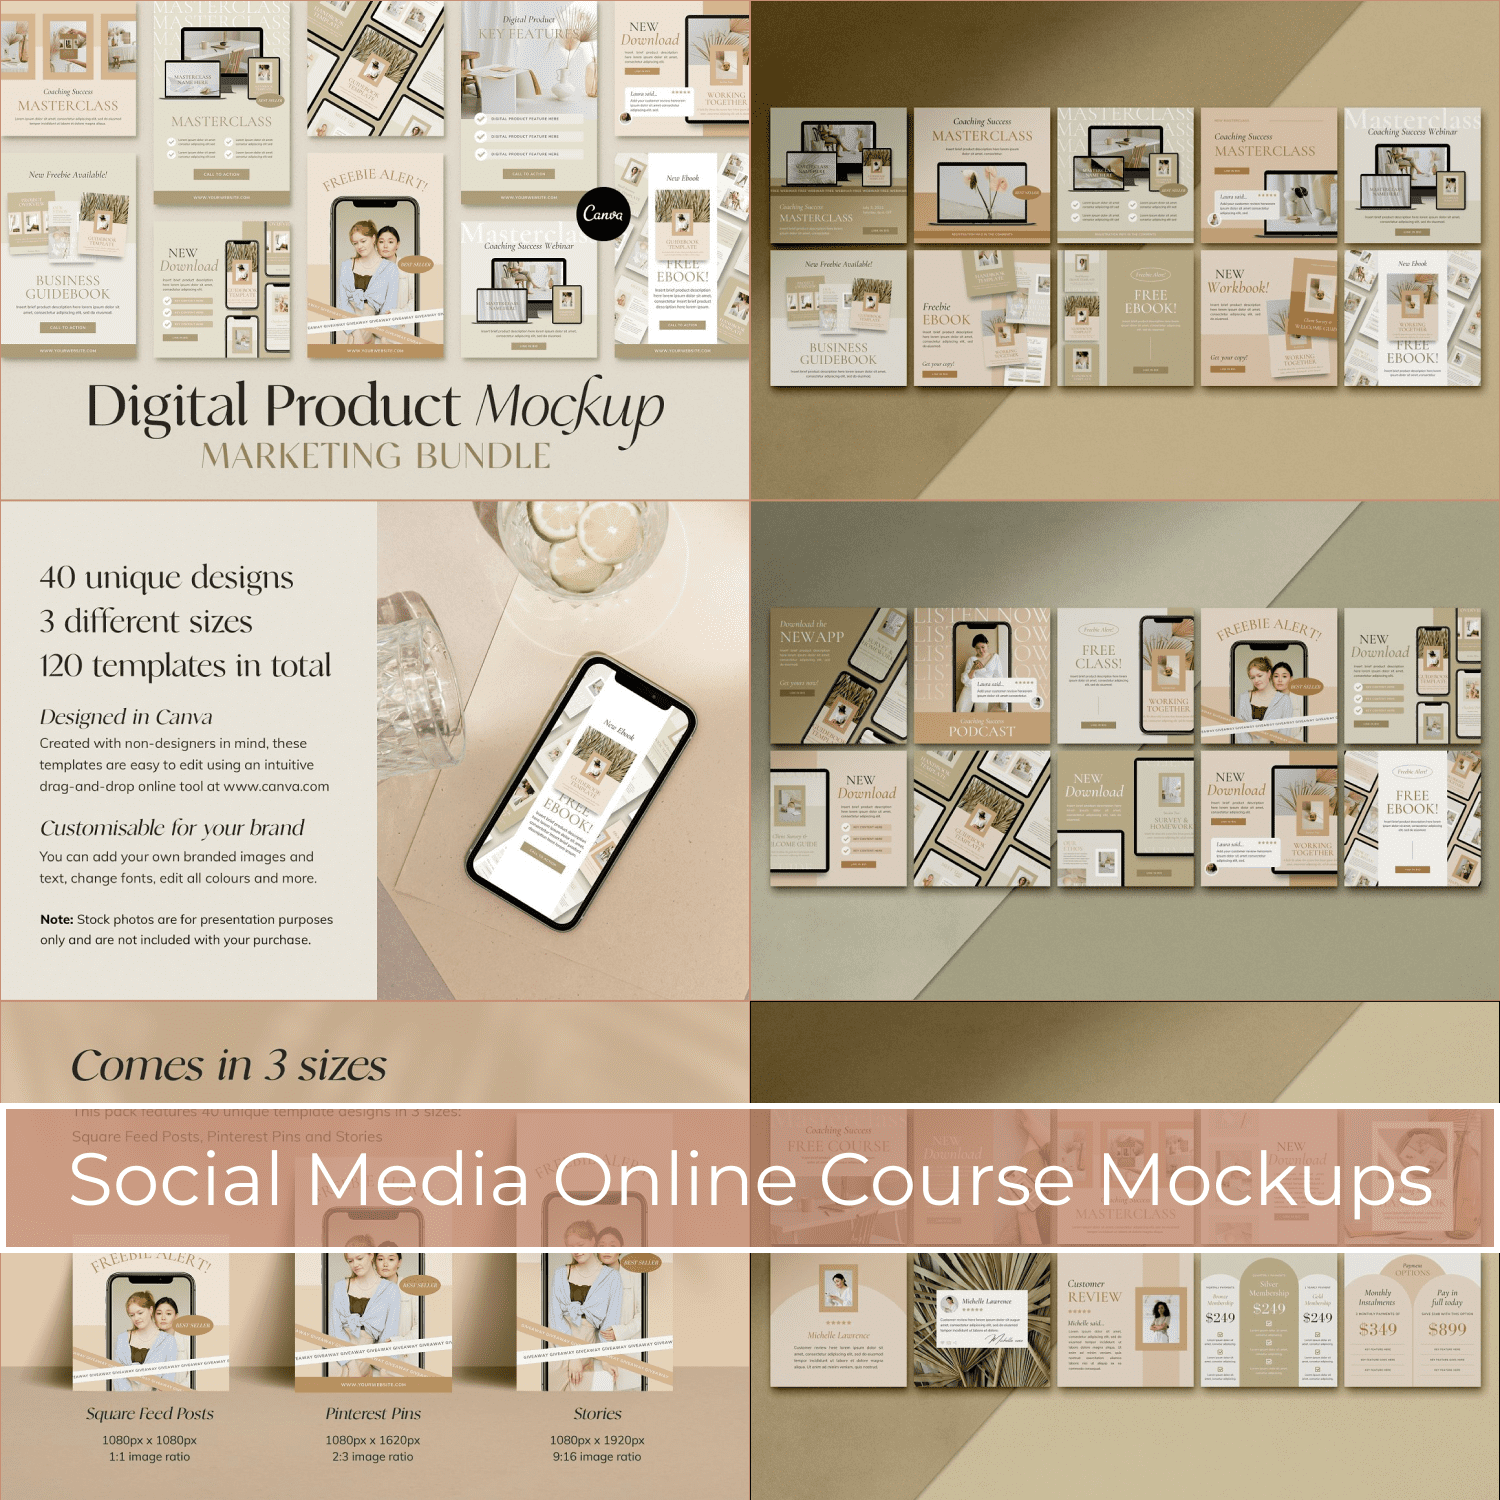 Social Media Online Course Mockups cover image.